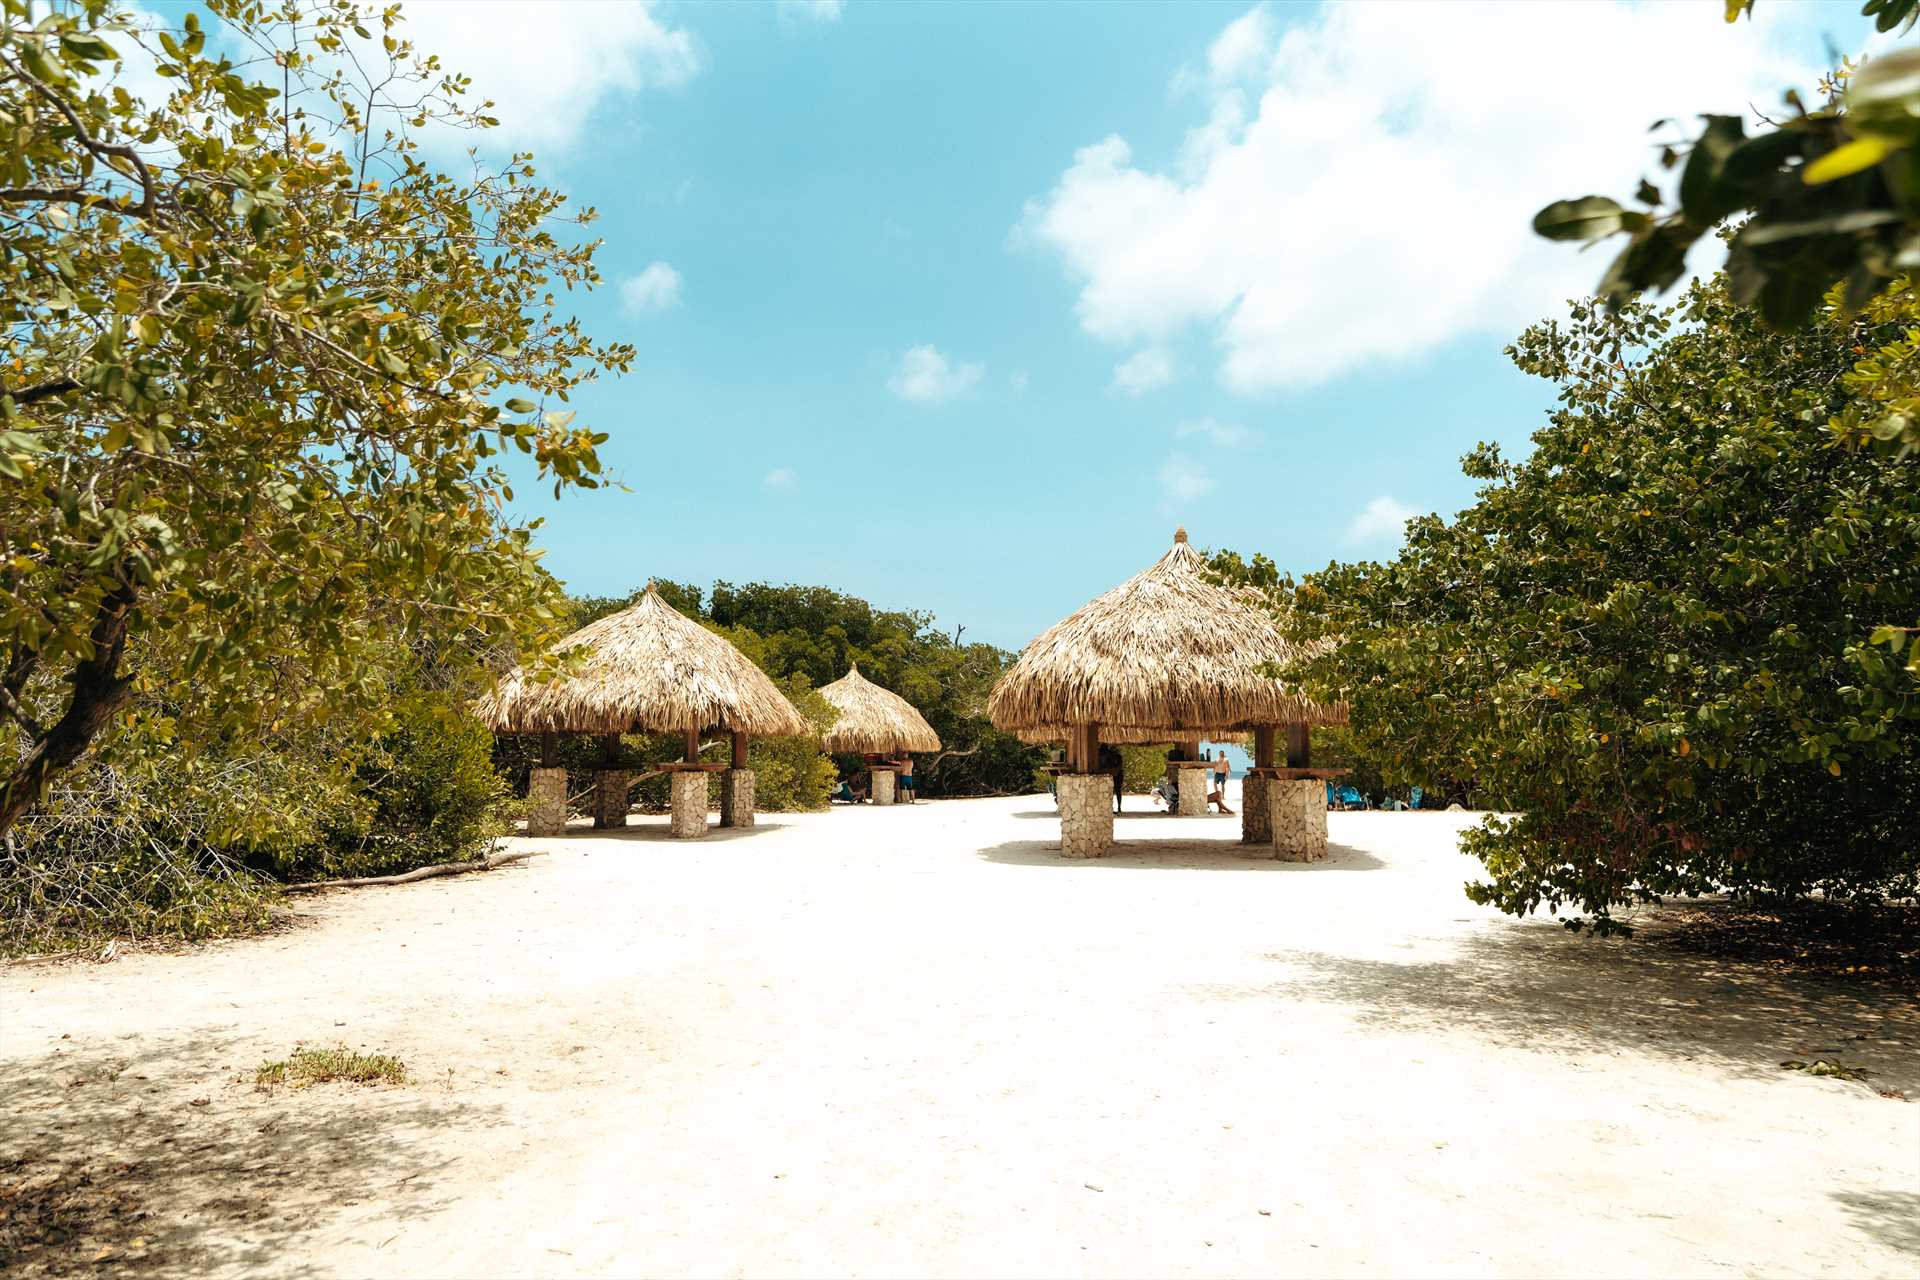 Public beach huts at Mangel Halto